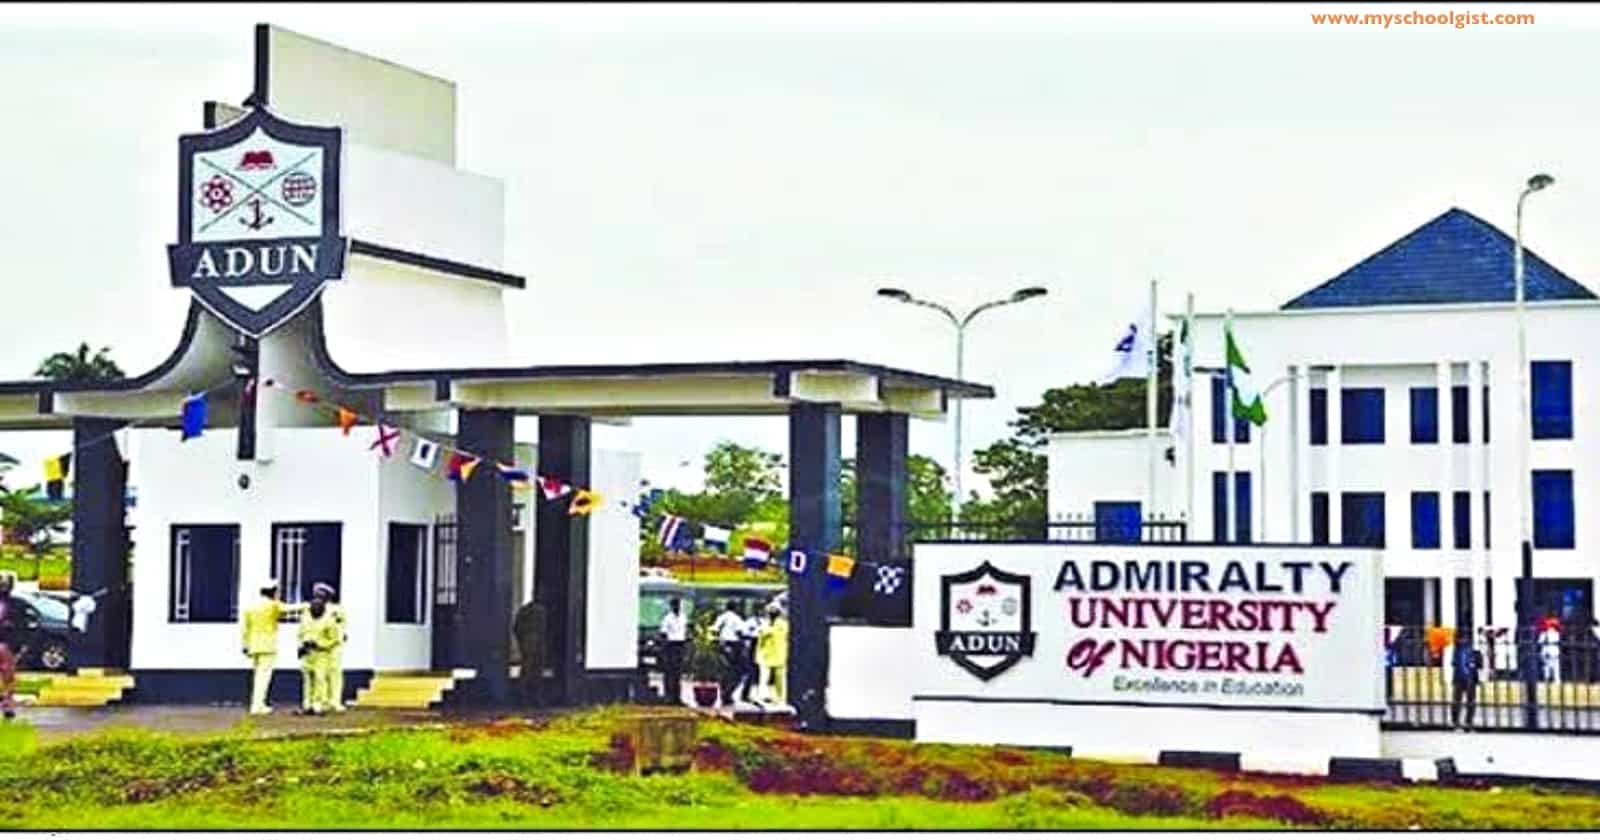 Admiralty University of Nigeria (ADUN) Admission List